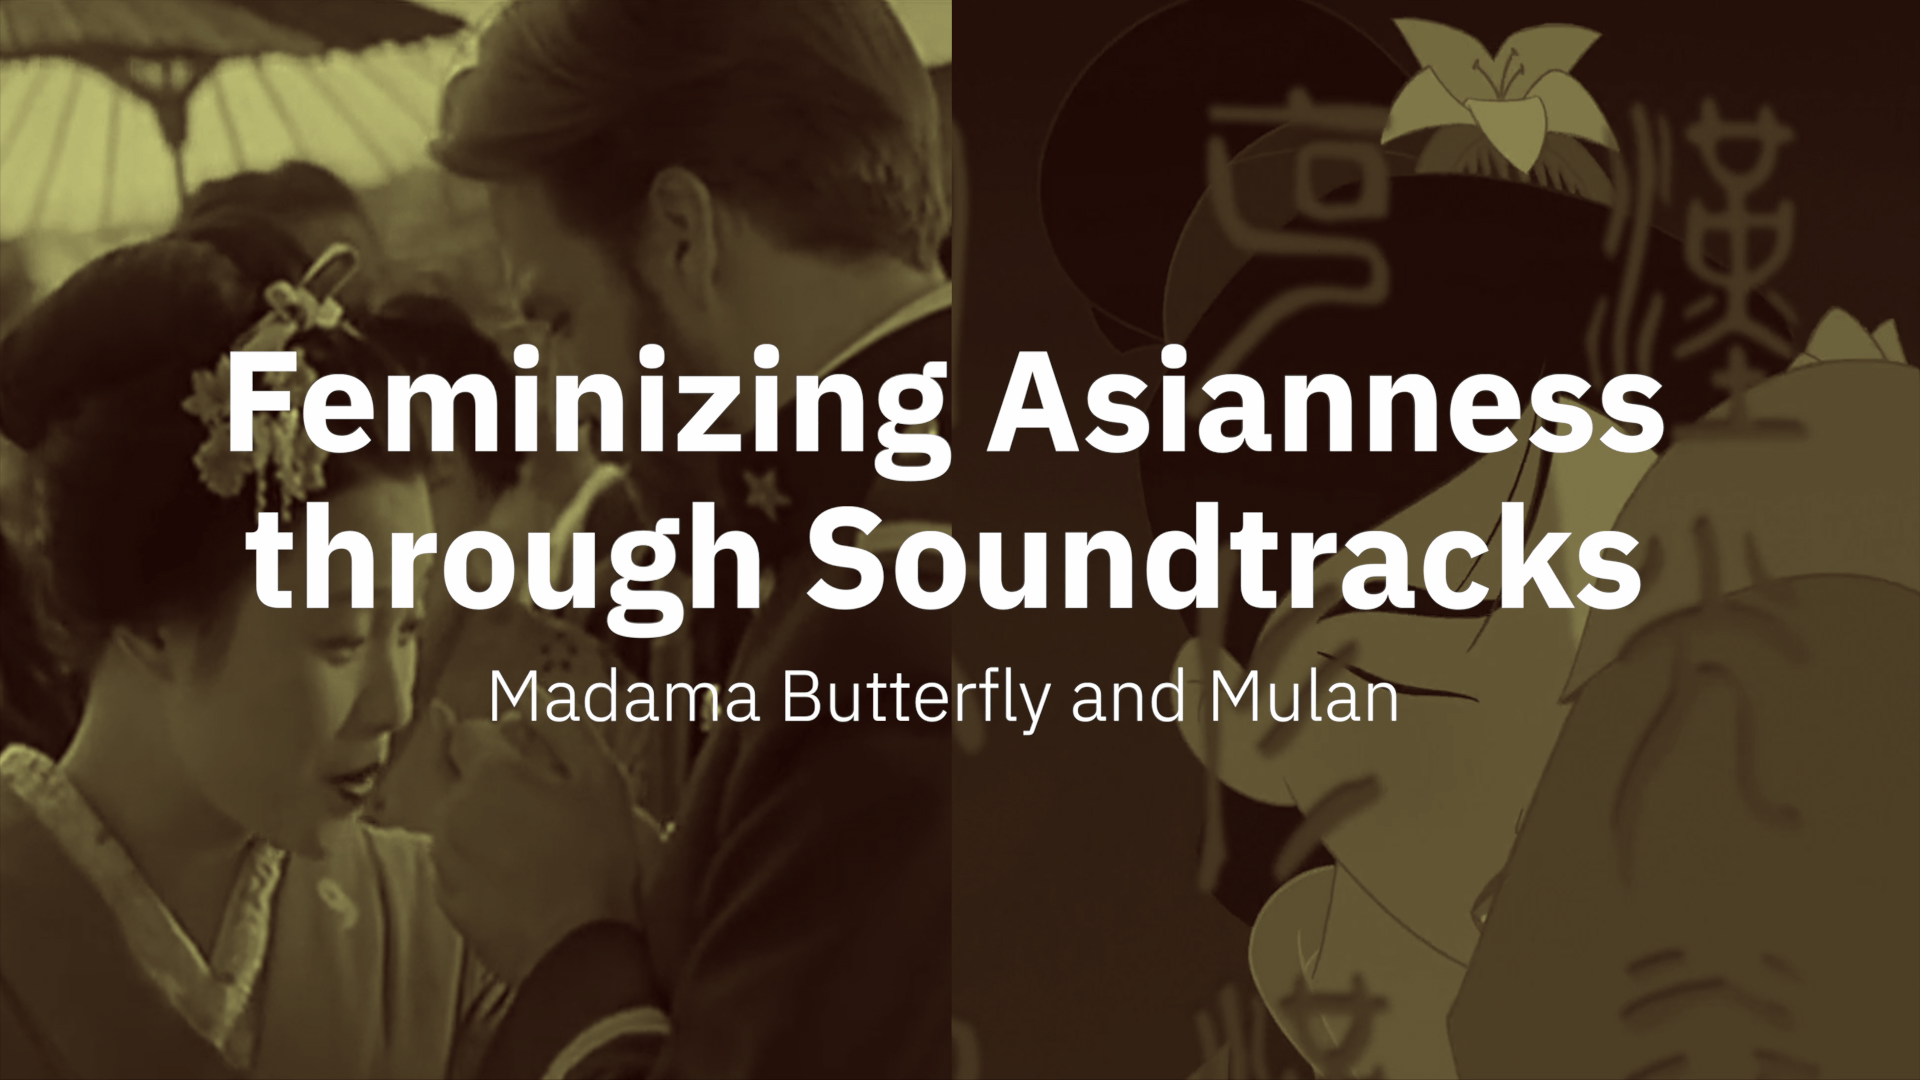 Episode 1: Feminizing Asianness through Soundtracks